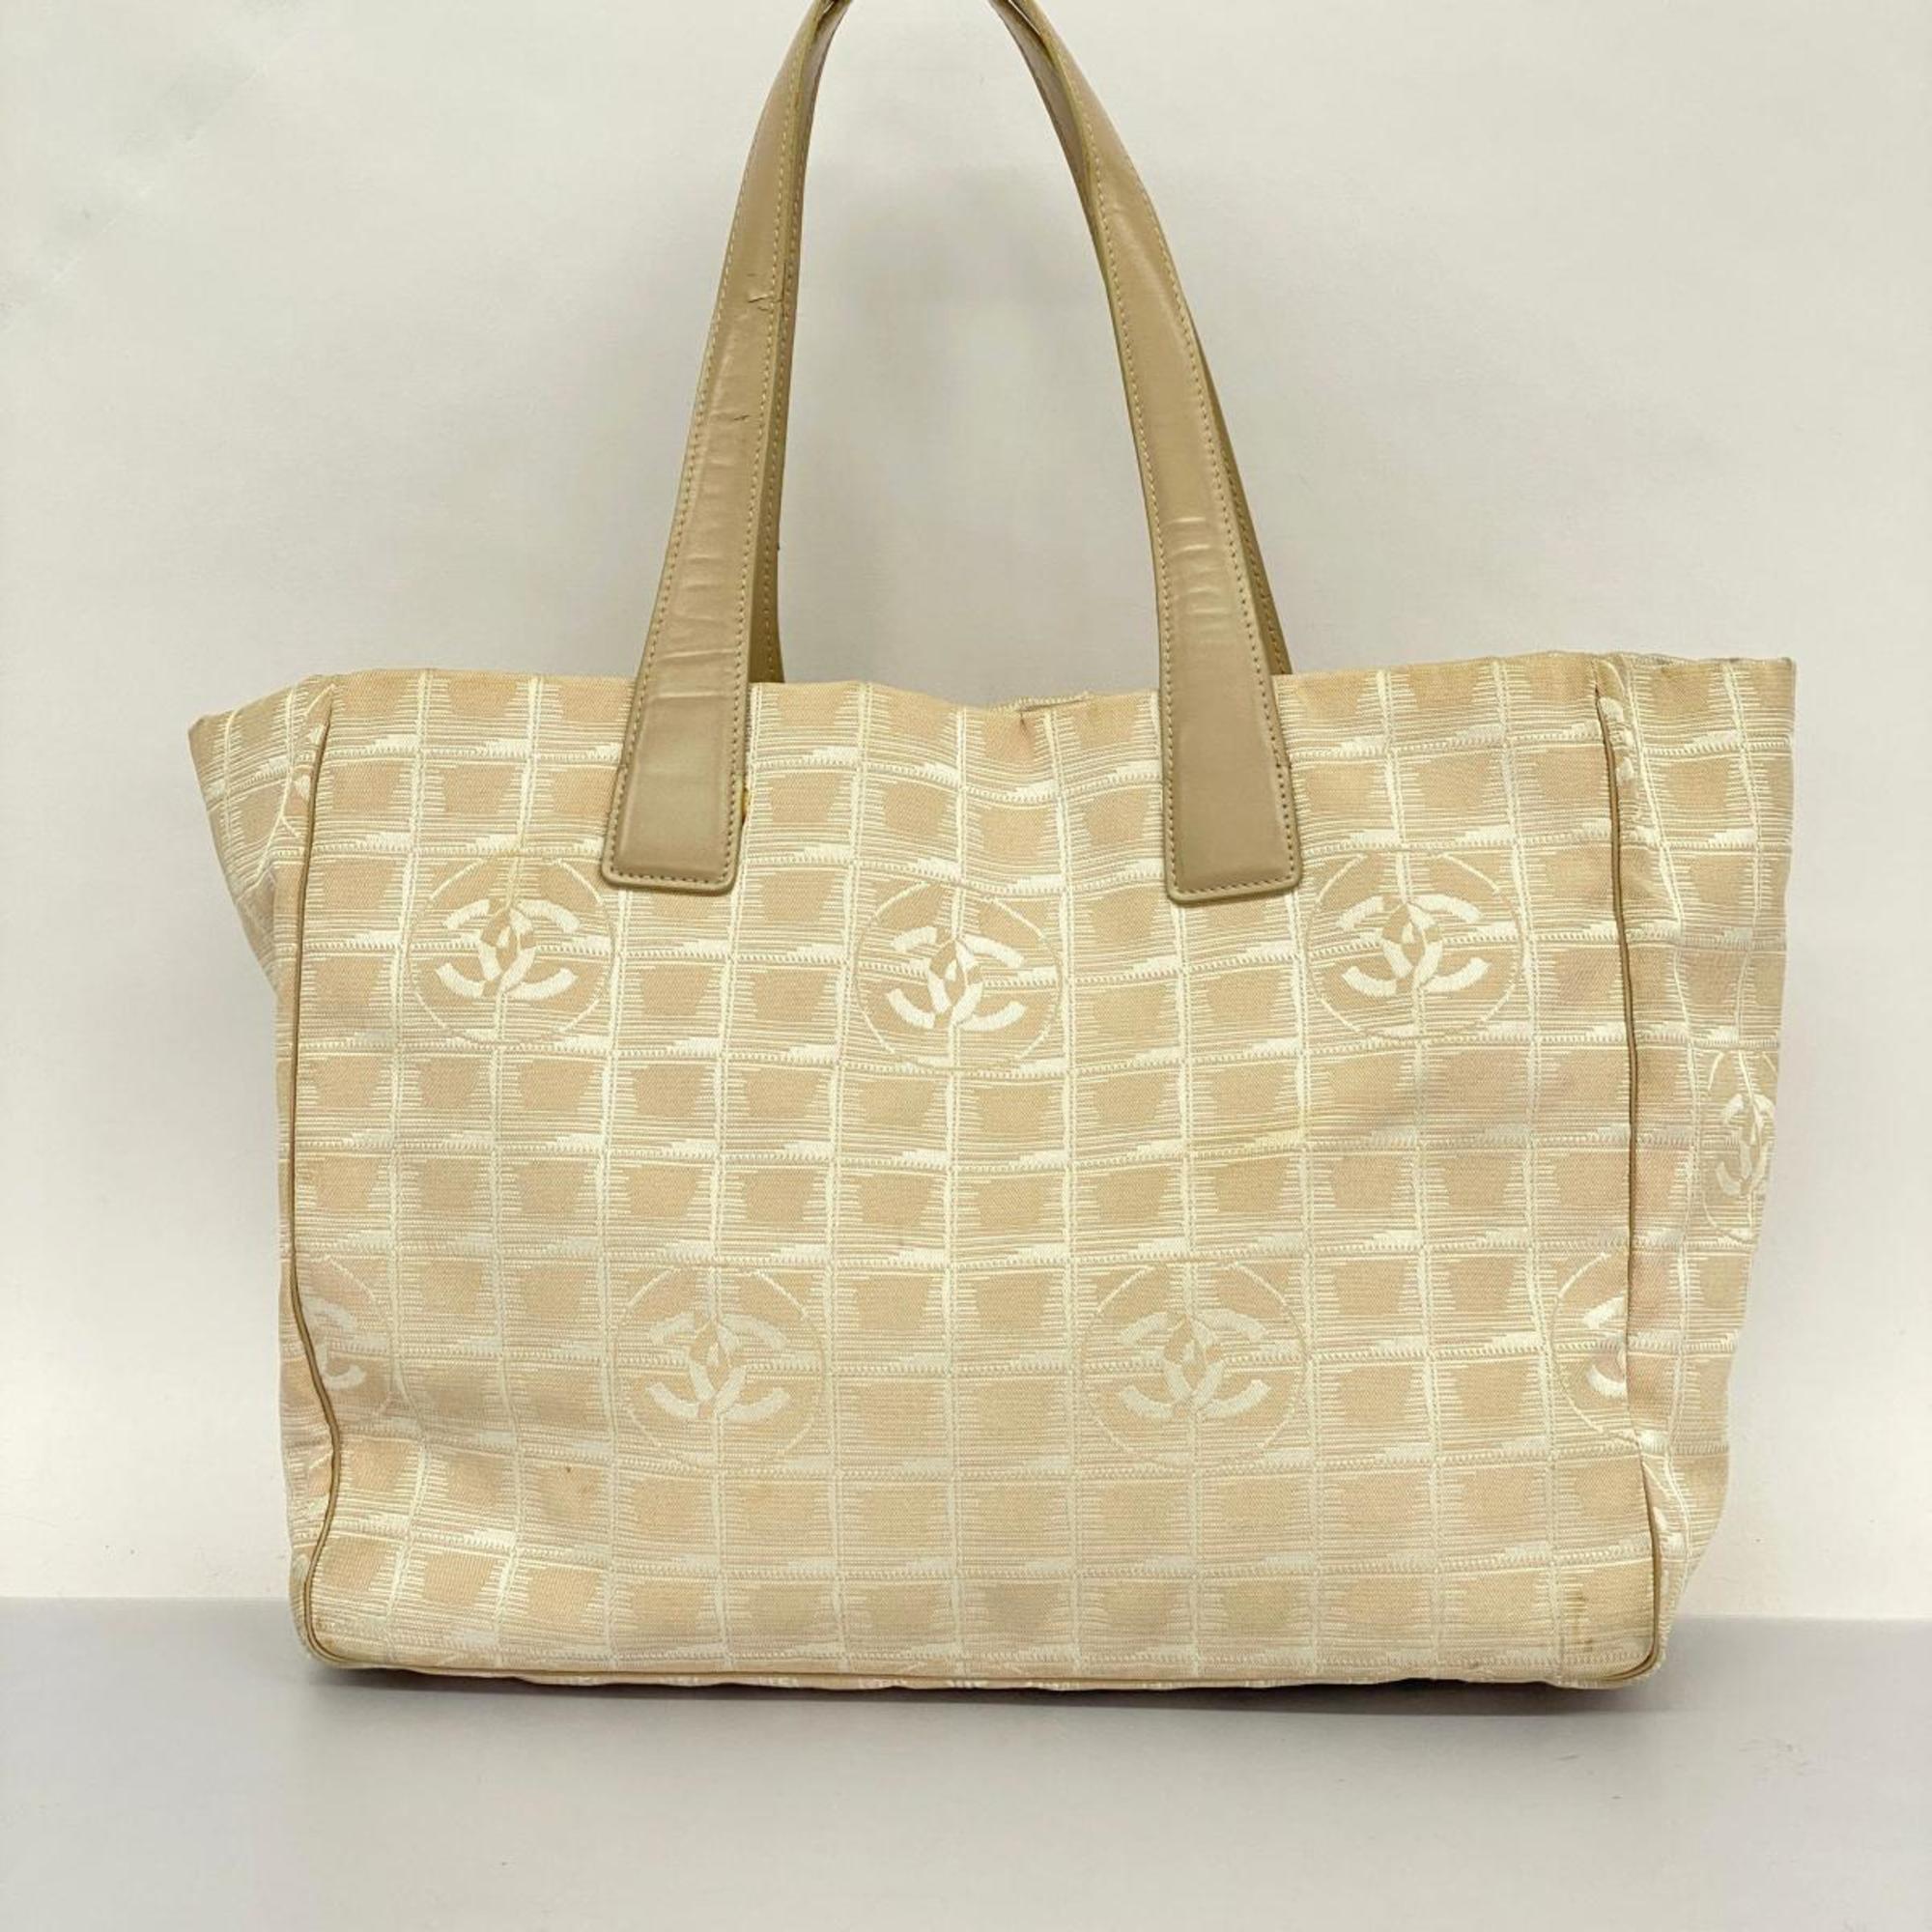 Chanel Tote Bag New Travel Nylon Beige Women's